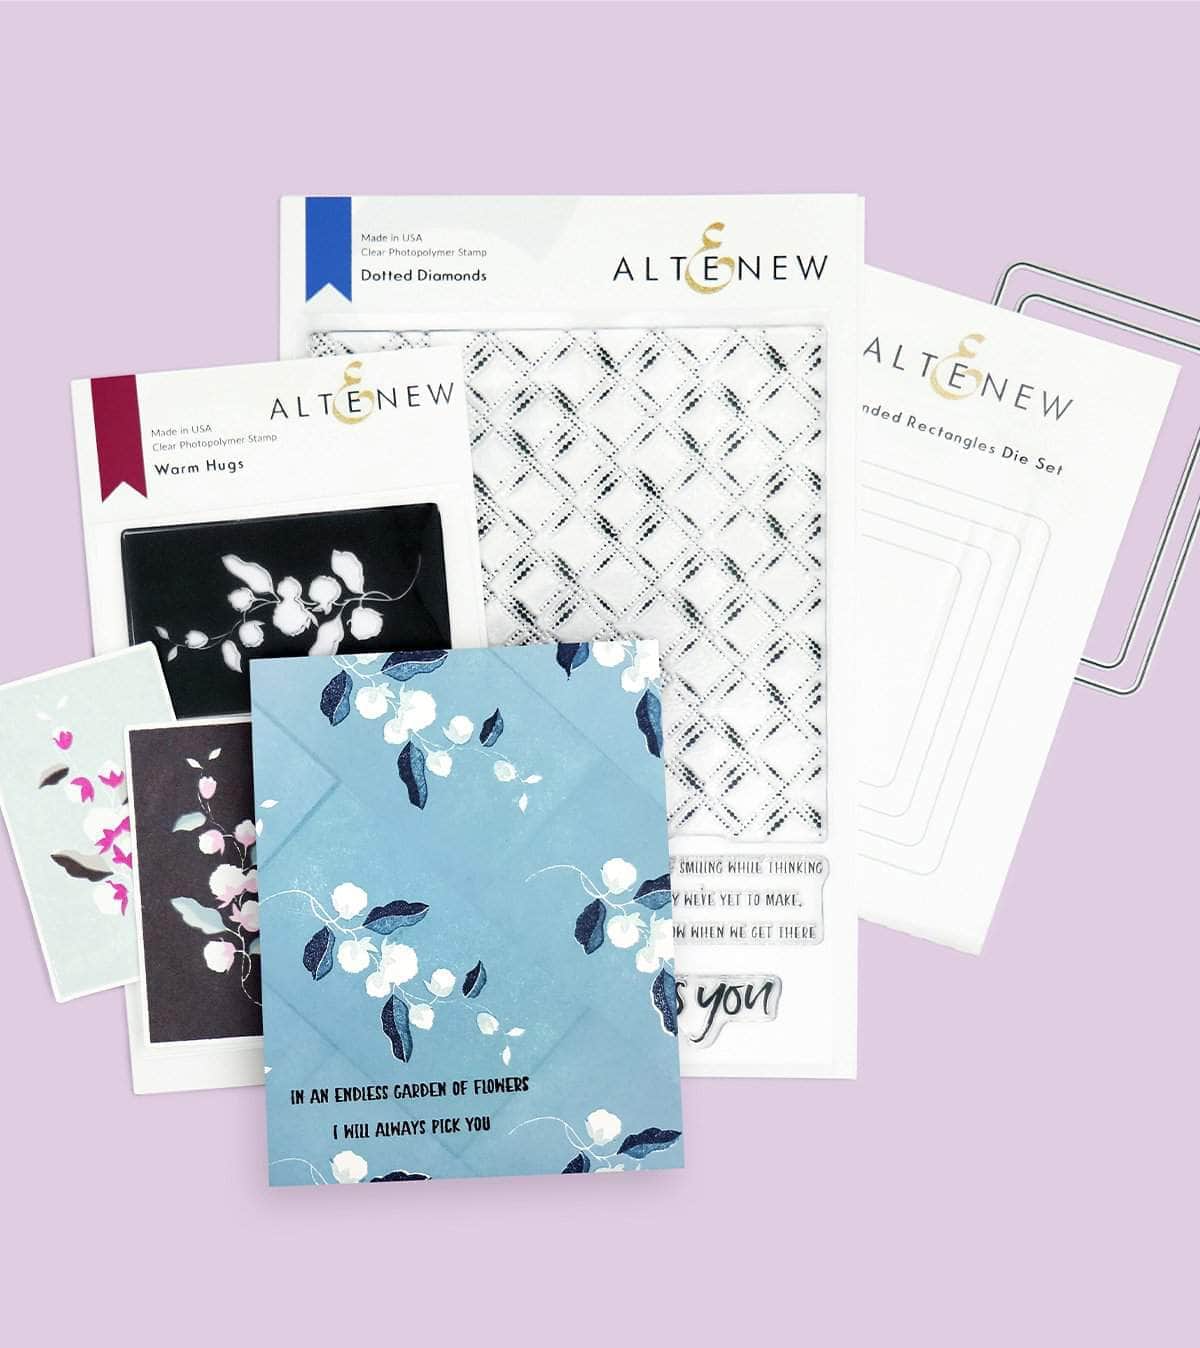 Altenew Creativity Kit Bundle Diamond Hugs Creativity Cardmaking Kit